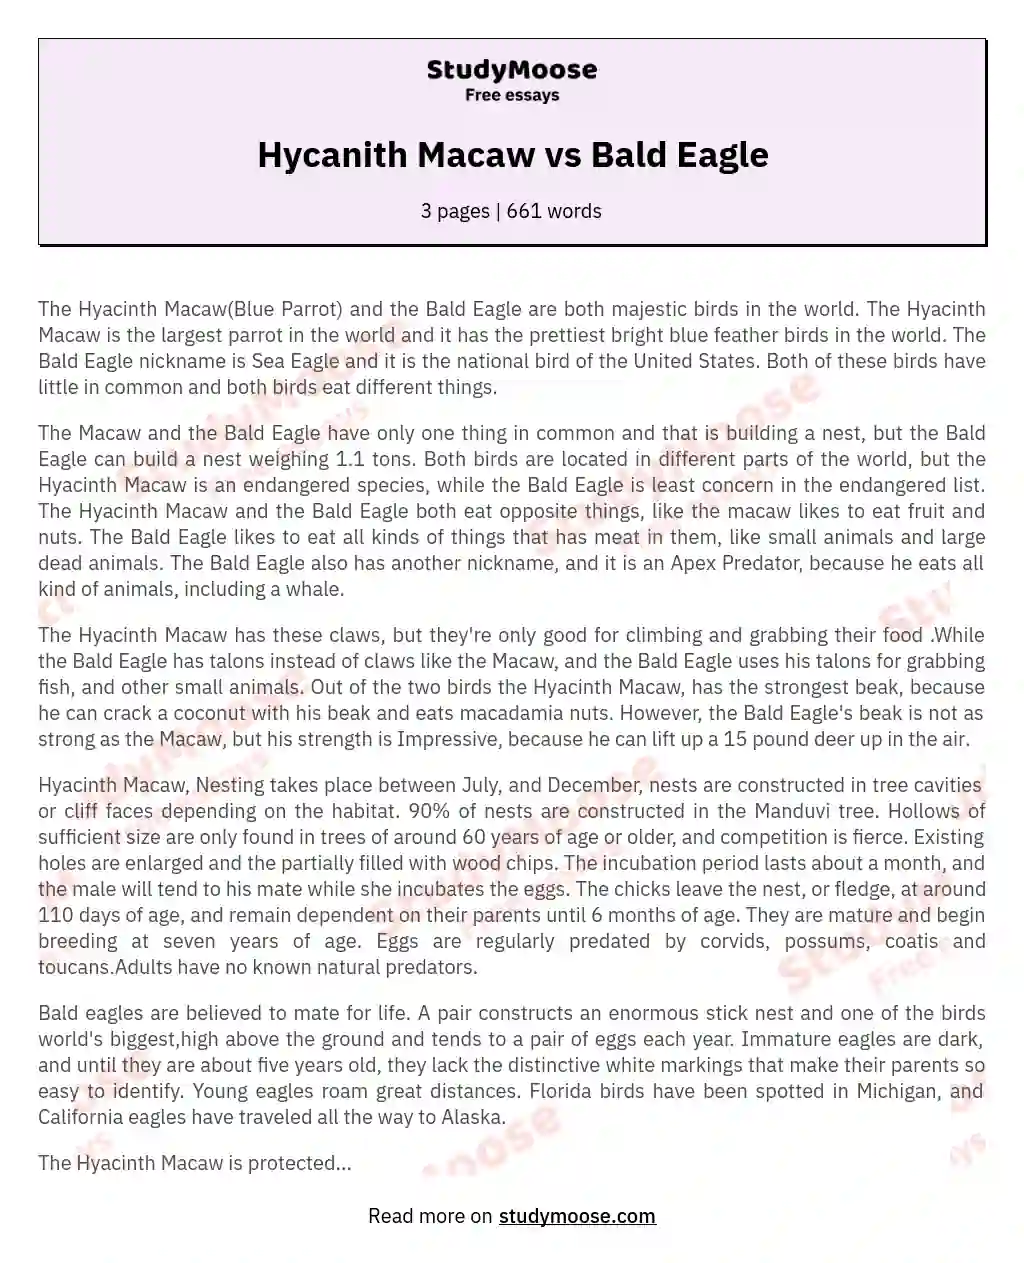 Hycanith Macaw vs Bald Eagle essay